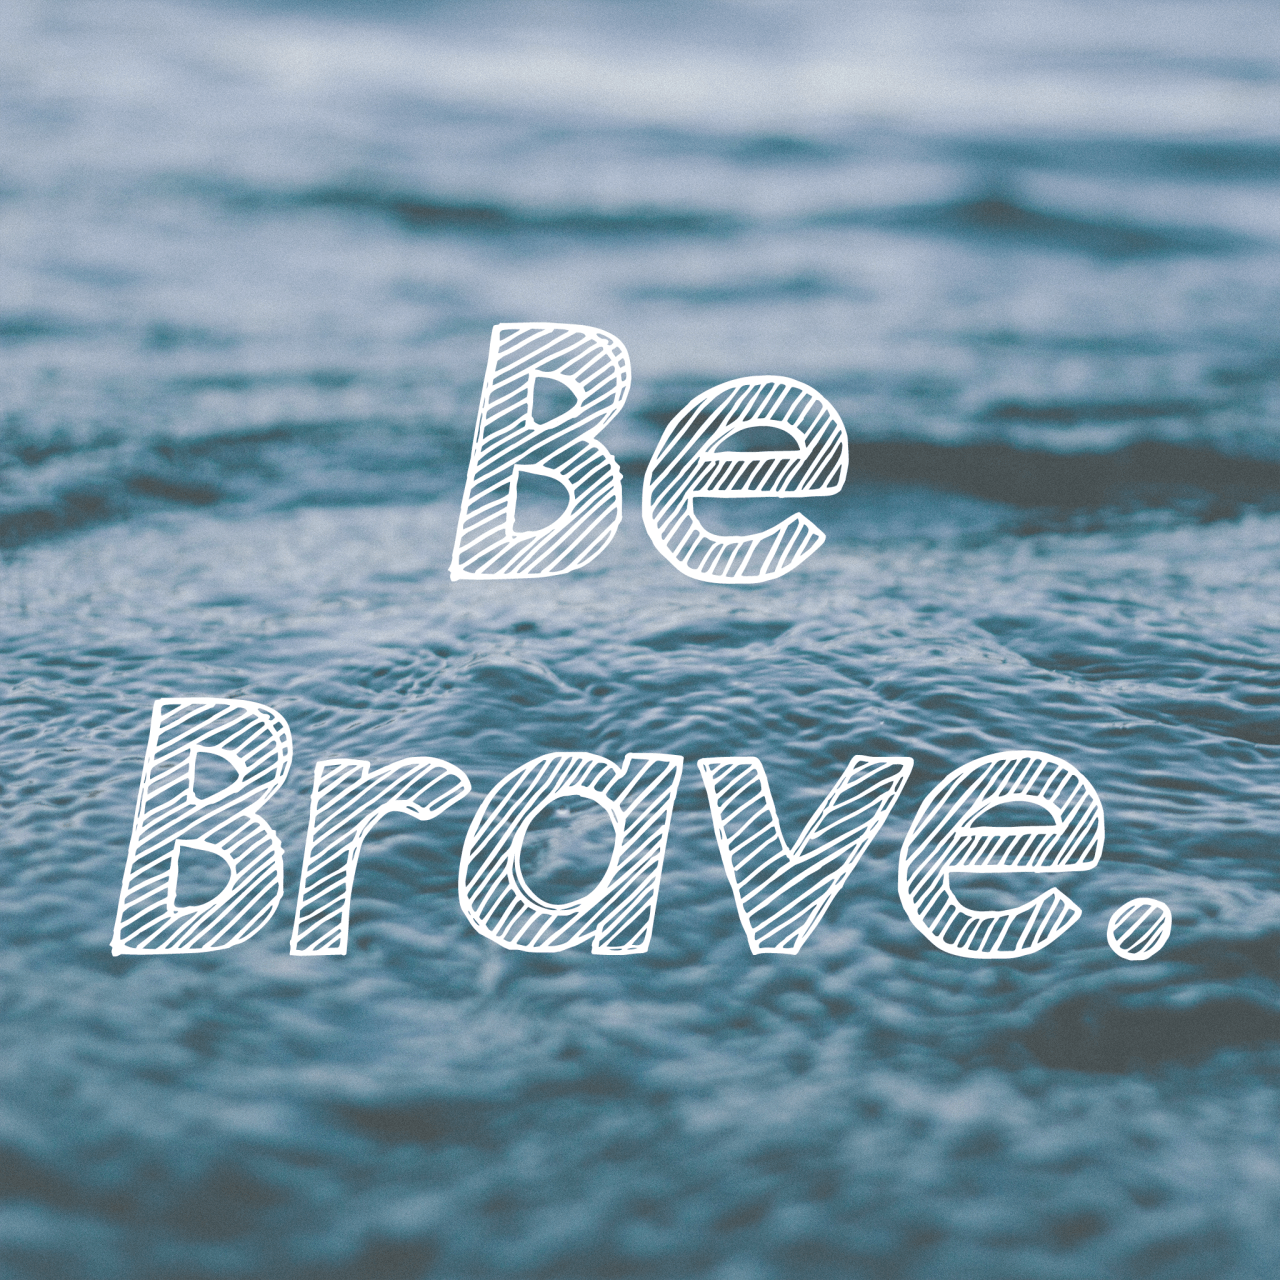 Motivation Monday: Be Brave on Katie Crafts; https://www.katiecrafts.com